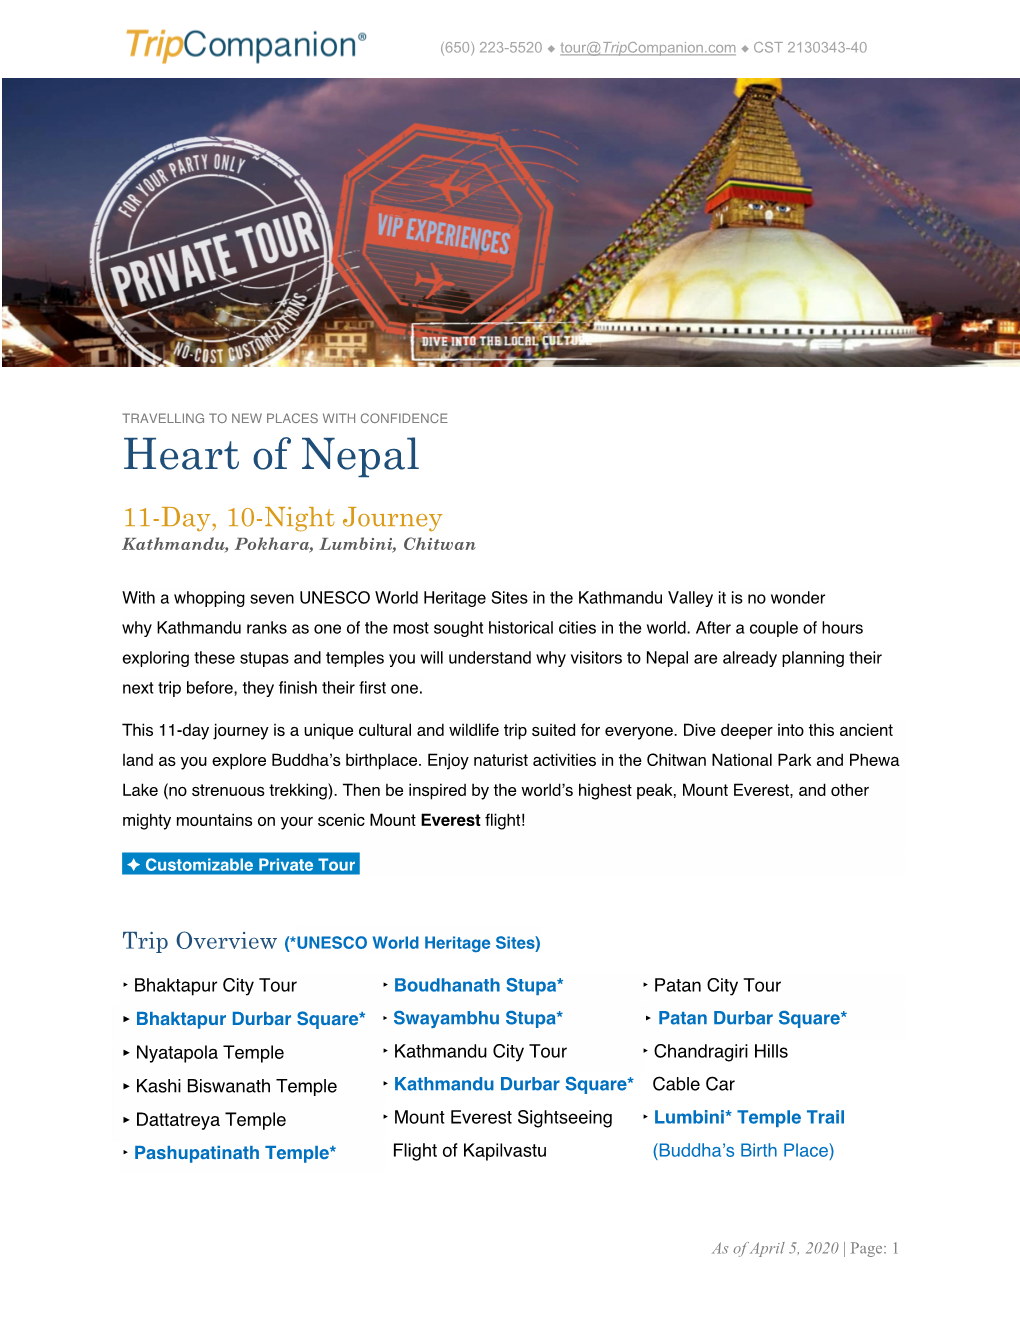 Heart of Nepal